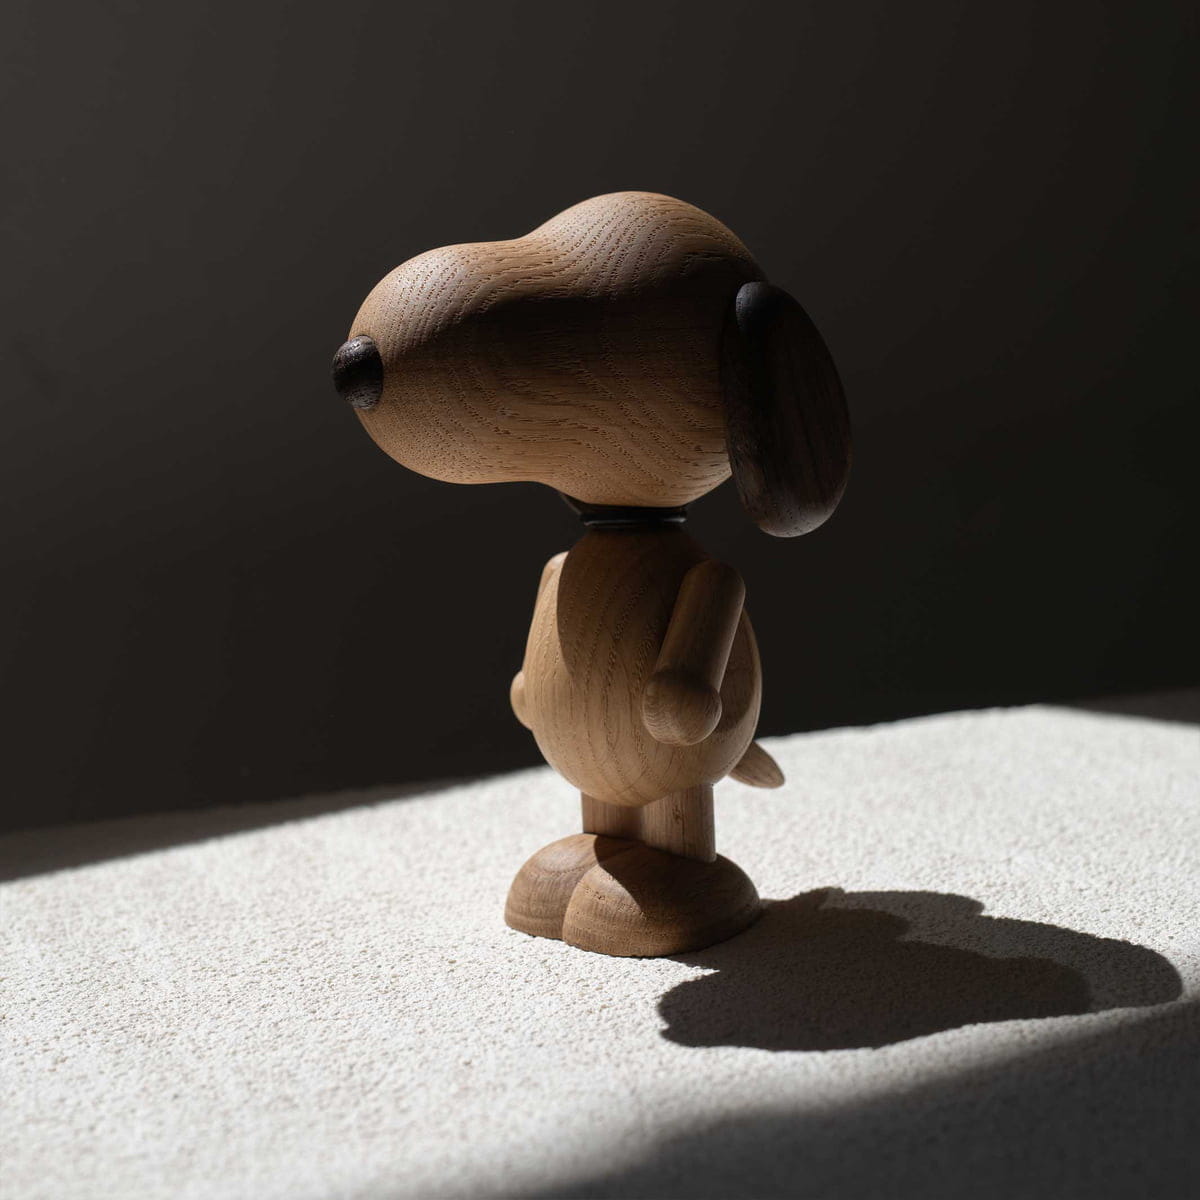 Fanciullezza snoopy Peanuts ™ ️ Figura in legno Oak, grande